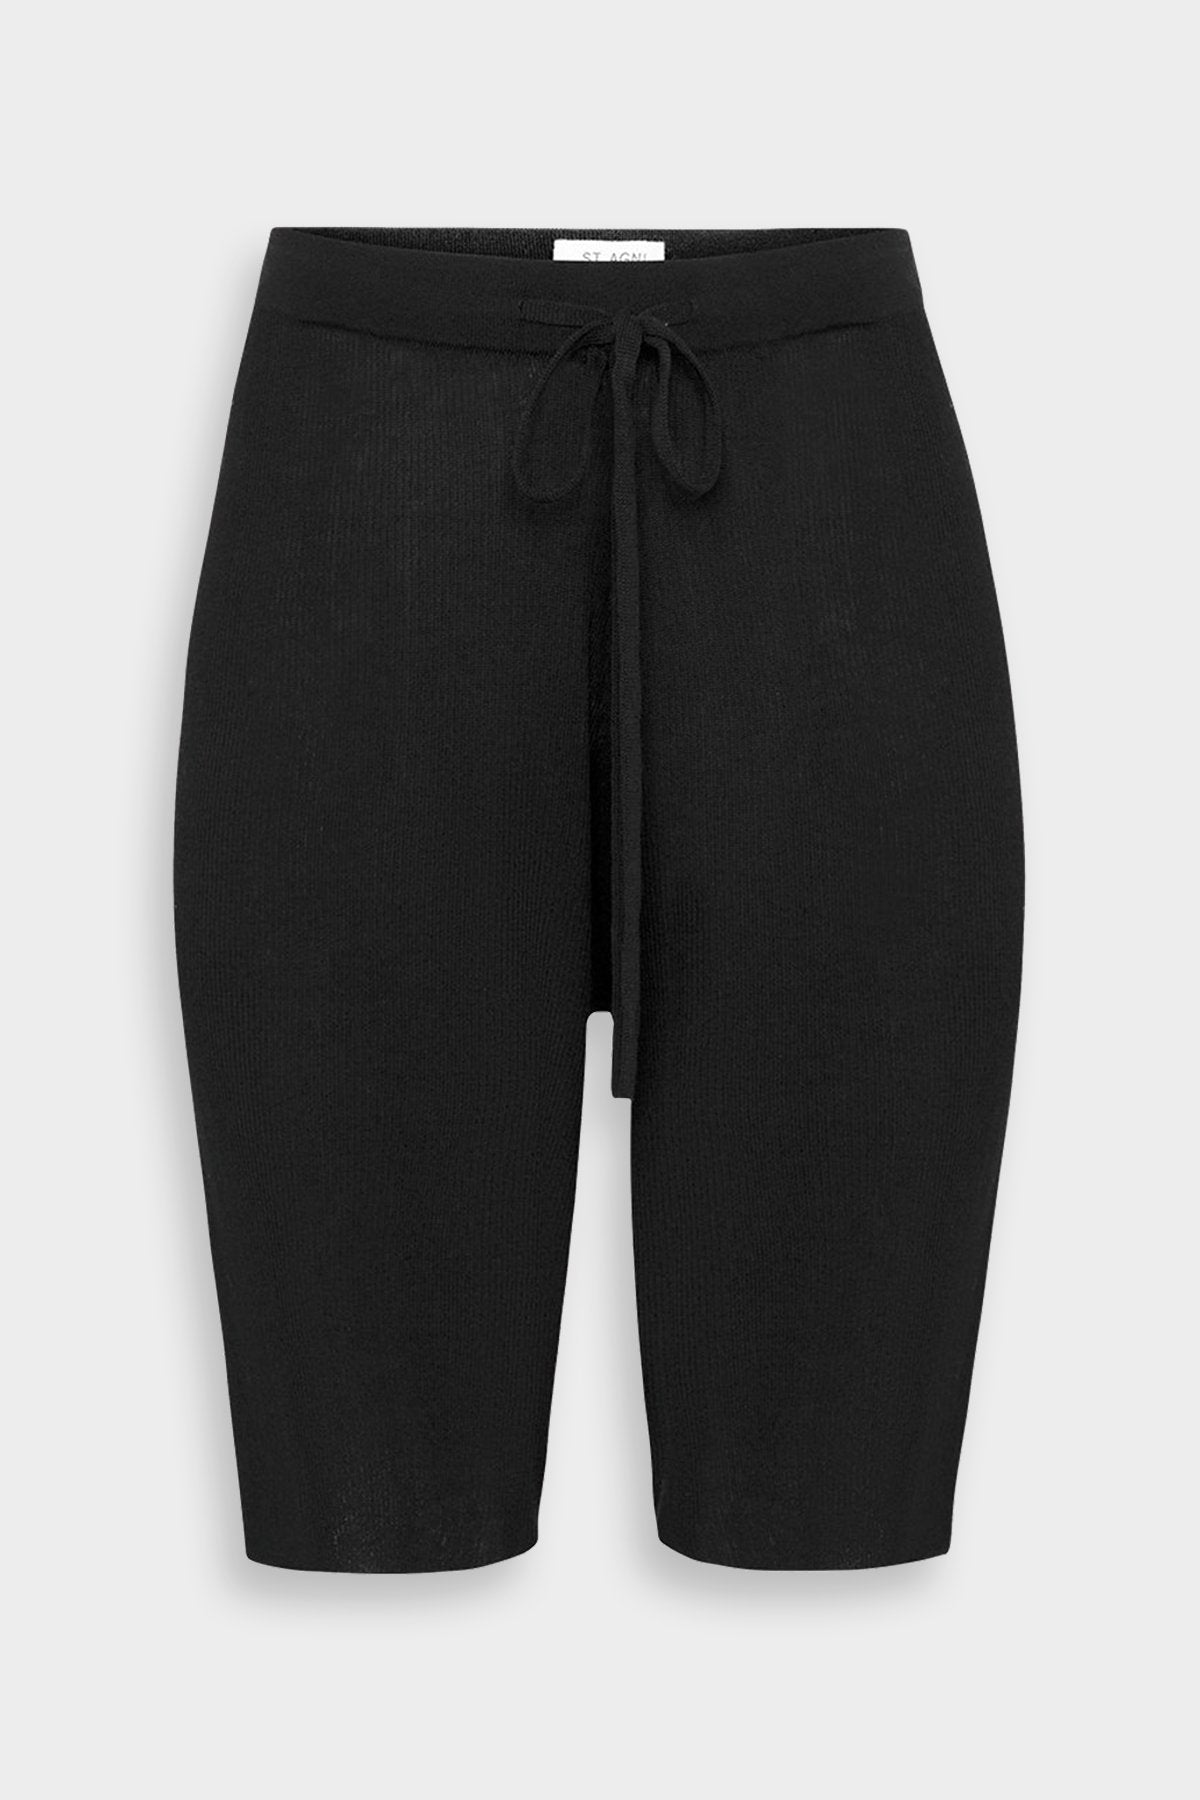 Zola Knit Long Shorts in Black - shop-olivia.com